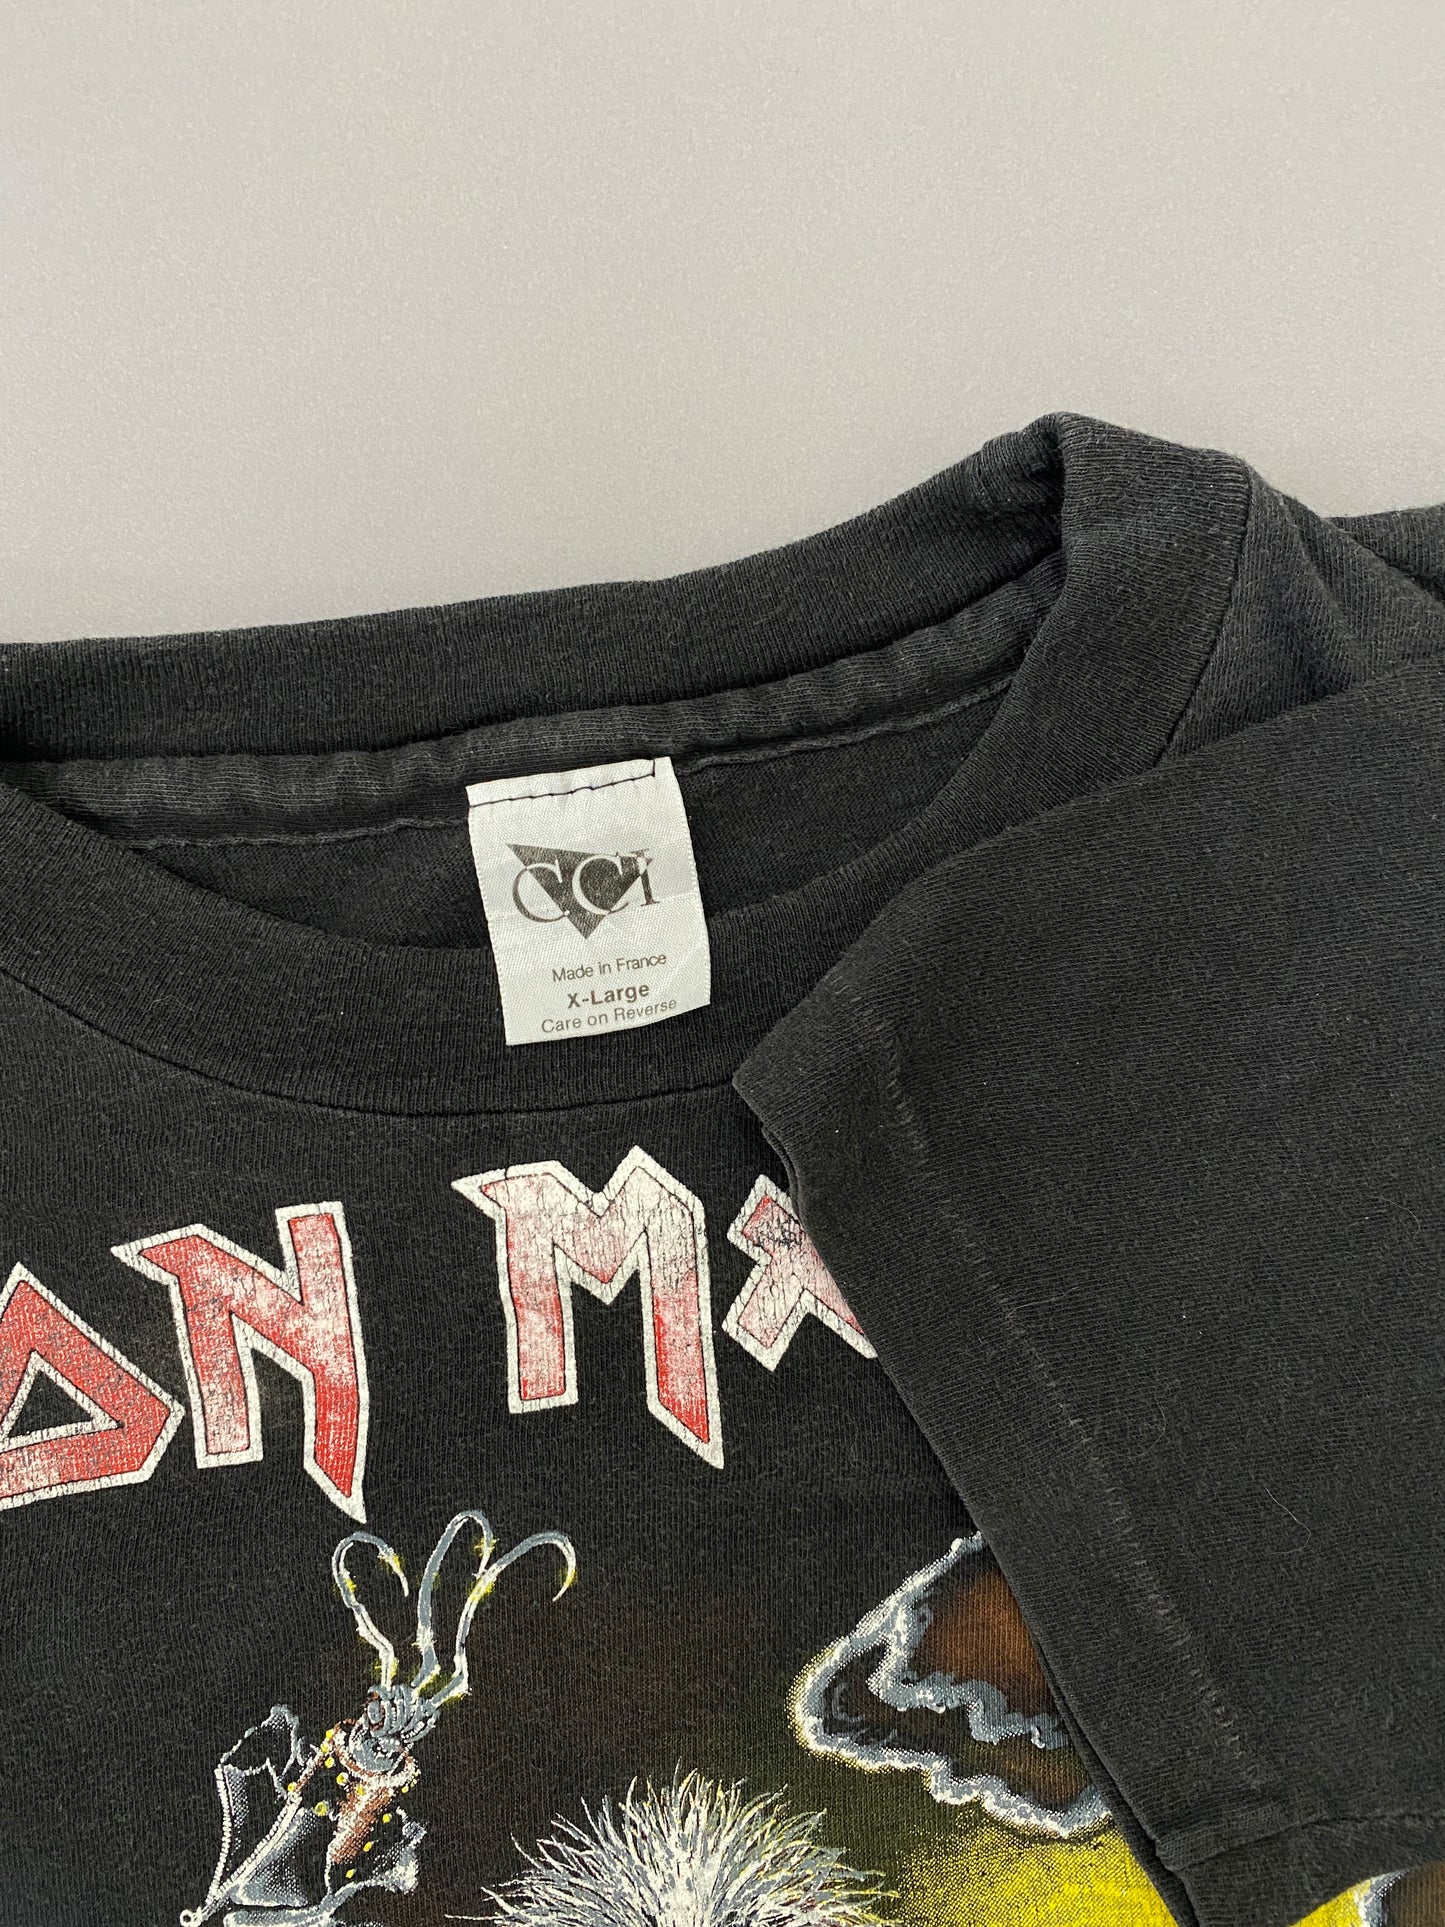 Iron Maiden Vintage 1991 No Prayer on The Road T-Shirt